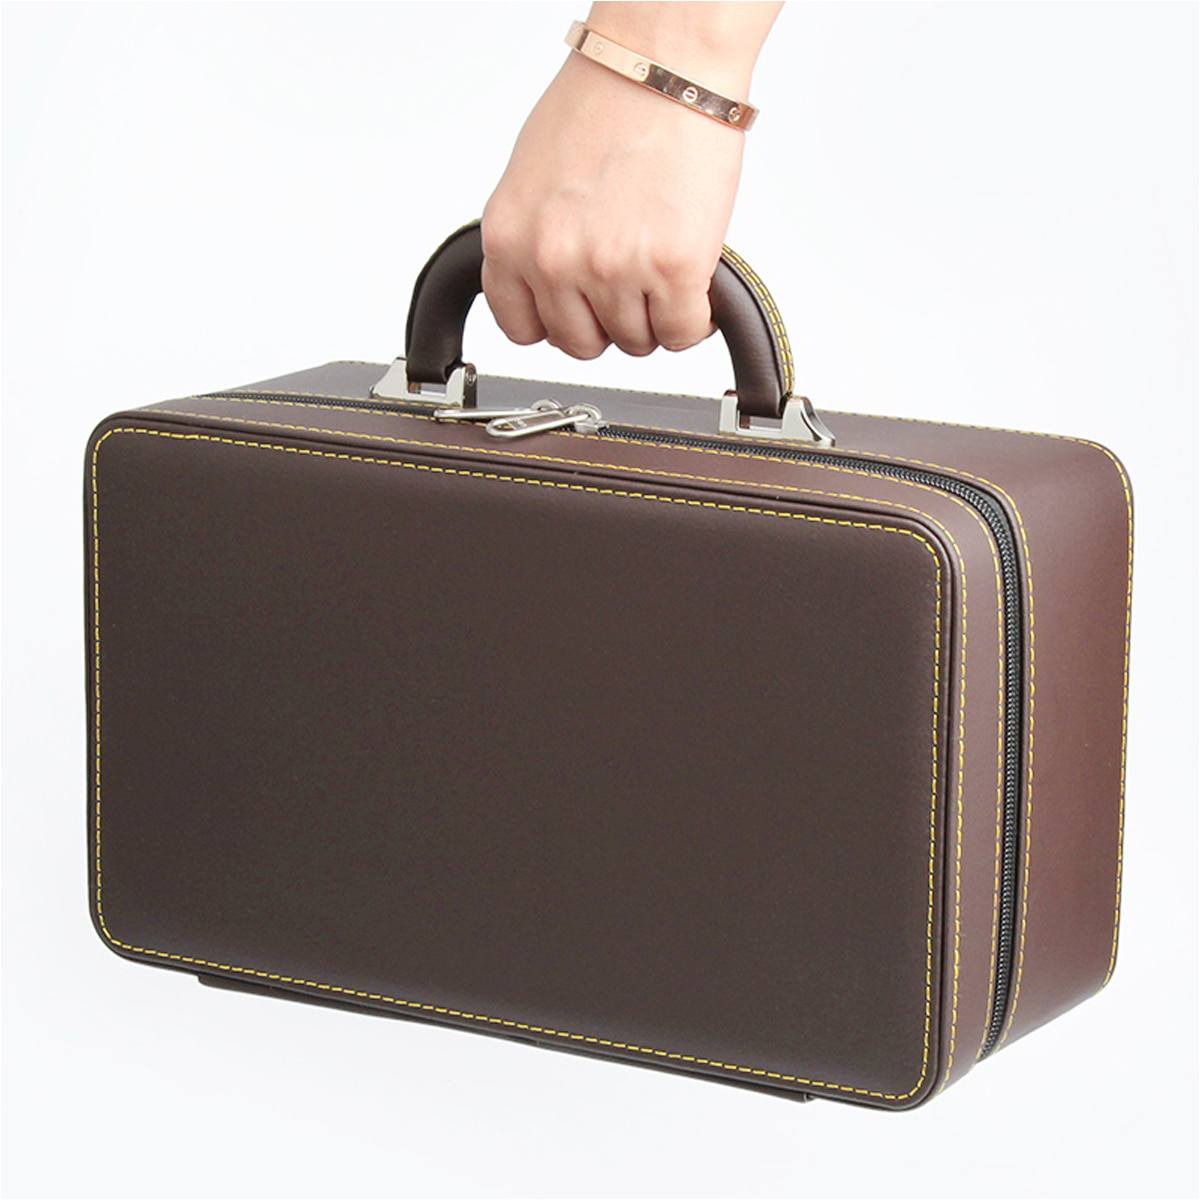 Nécessaire maletinha para joias – porta-joias (modelo 1)